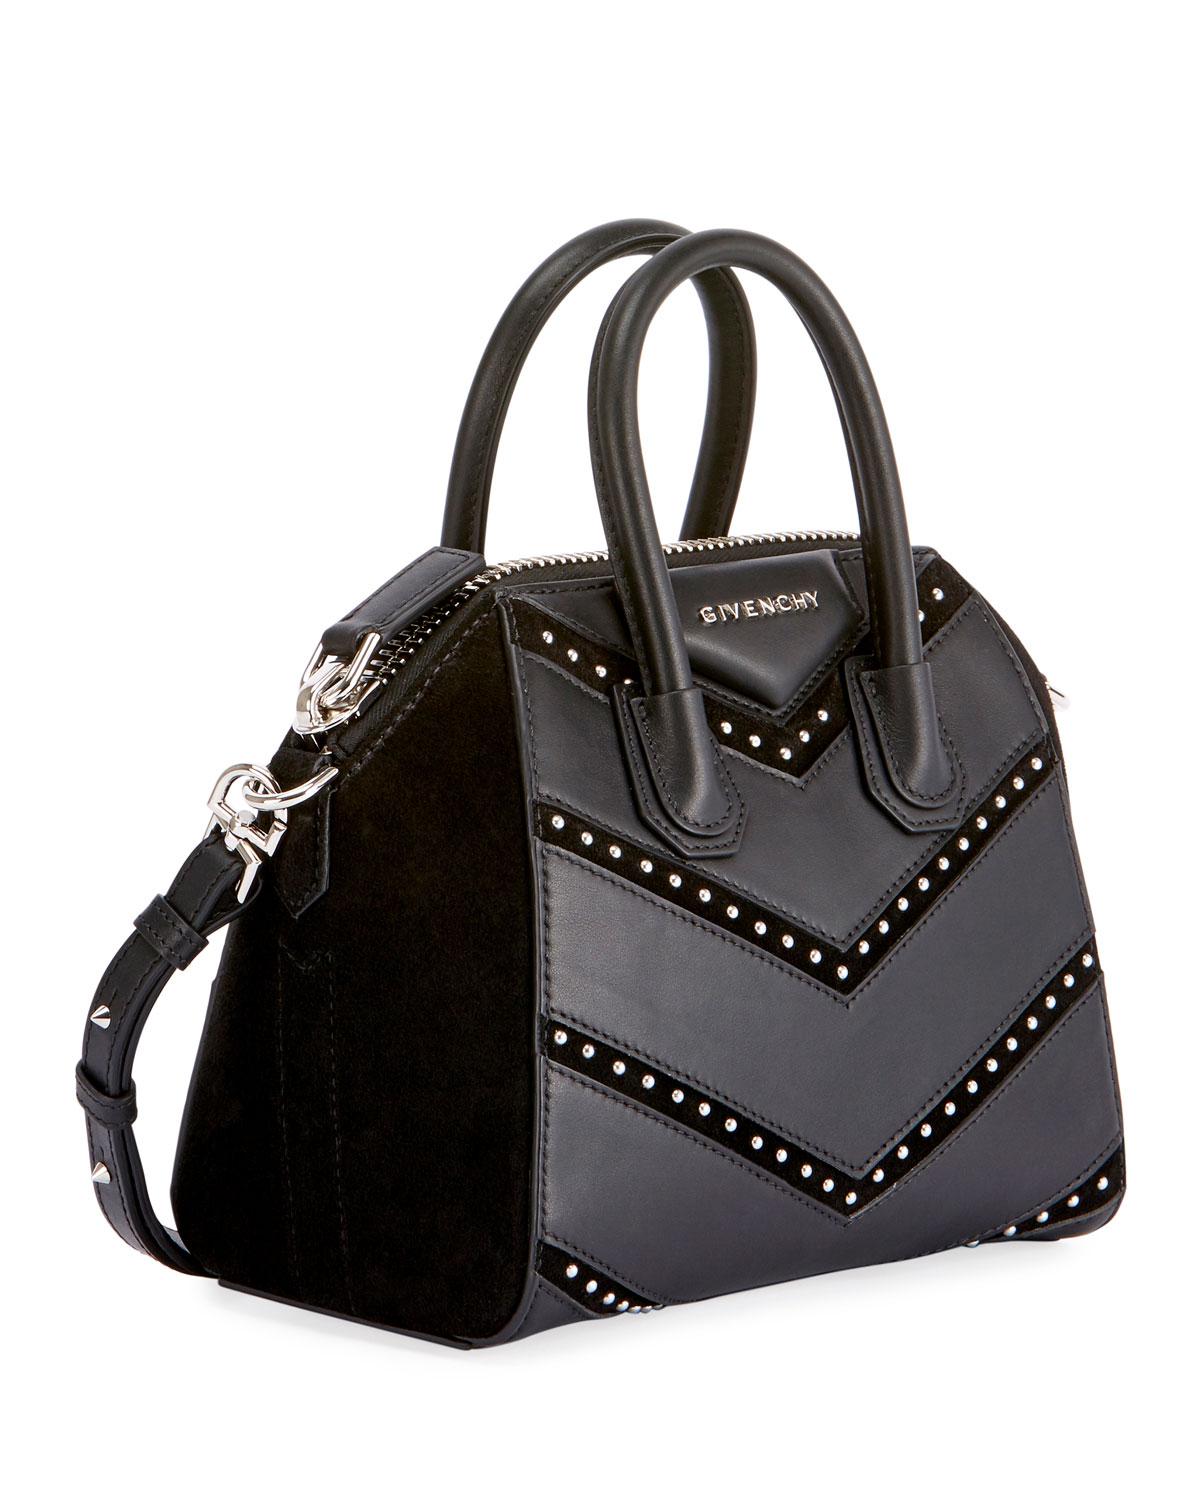 Givenchy Leather Antigona Mini Studded Chevron Satchel Bag in Black - Lyst